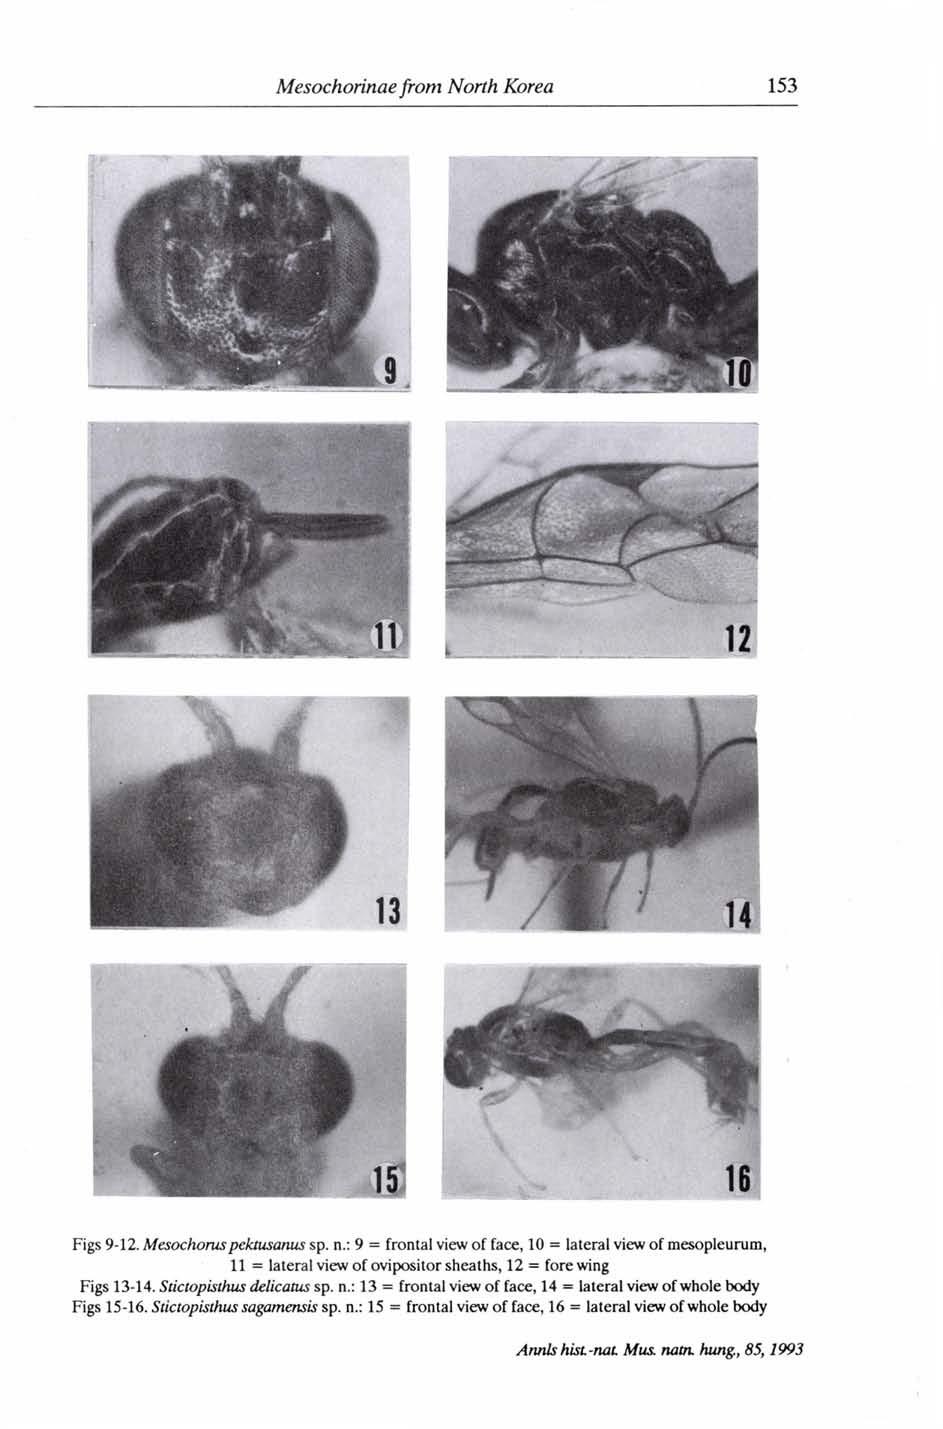 Figs 9-12. Mesochoruspektusanus sp. n.: 9 = frontal view of face, 10 = lateral view of mesopieurum, 11 = lateral view of ovipositor sheaths, 12 = fore wing Figs 13-14.